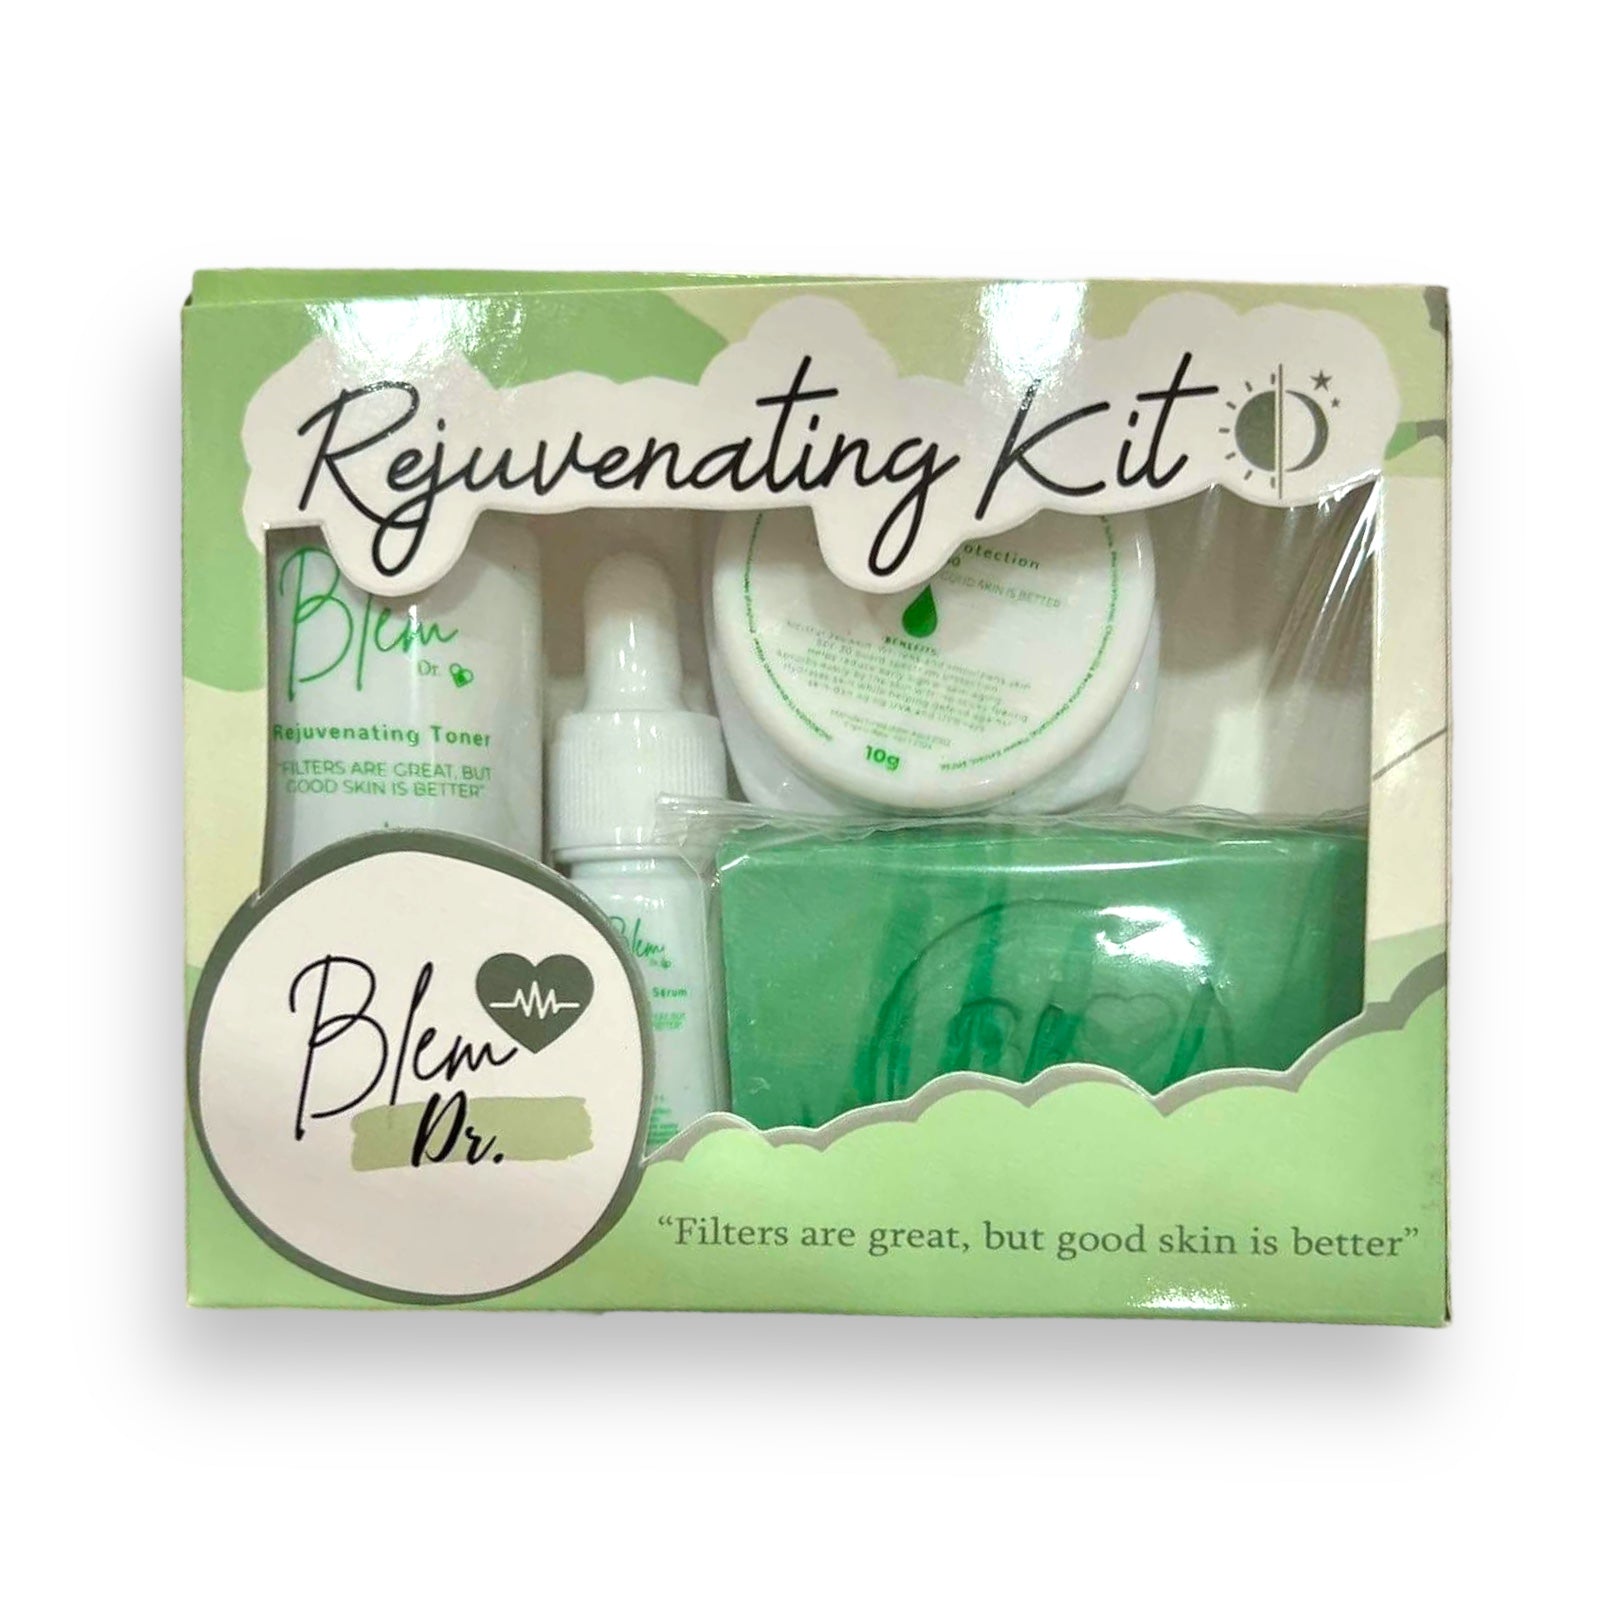 Blem Dr - Rejuvenating Kit